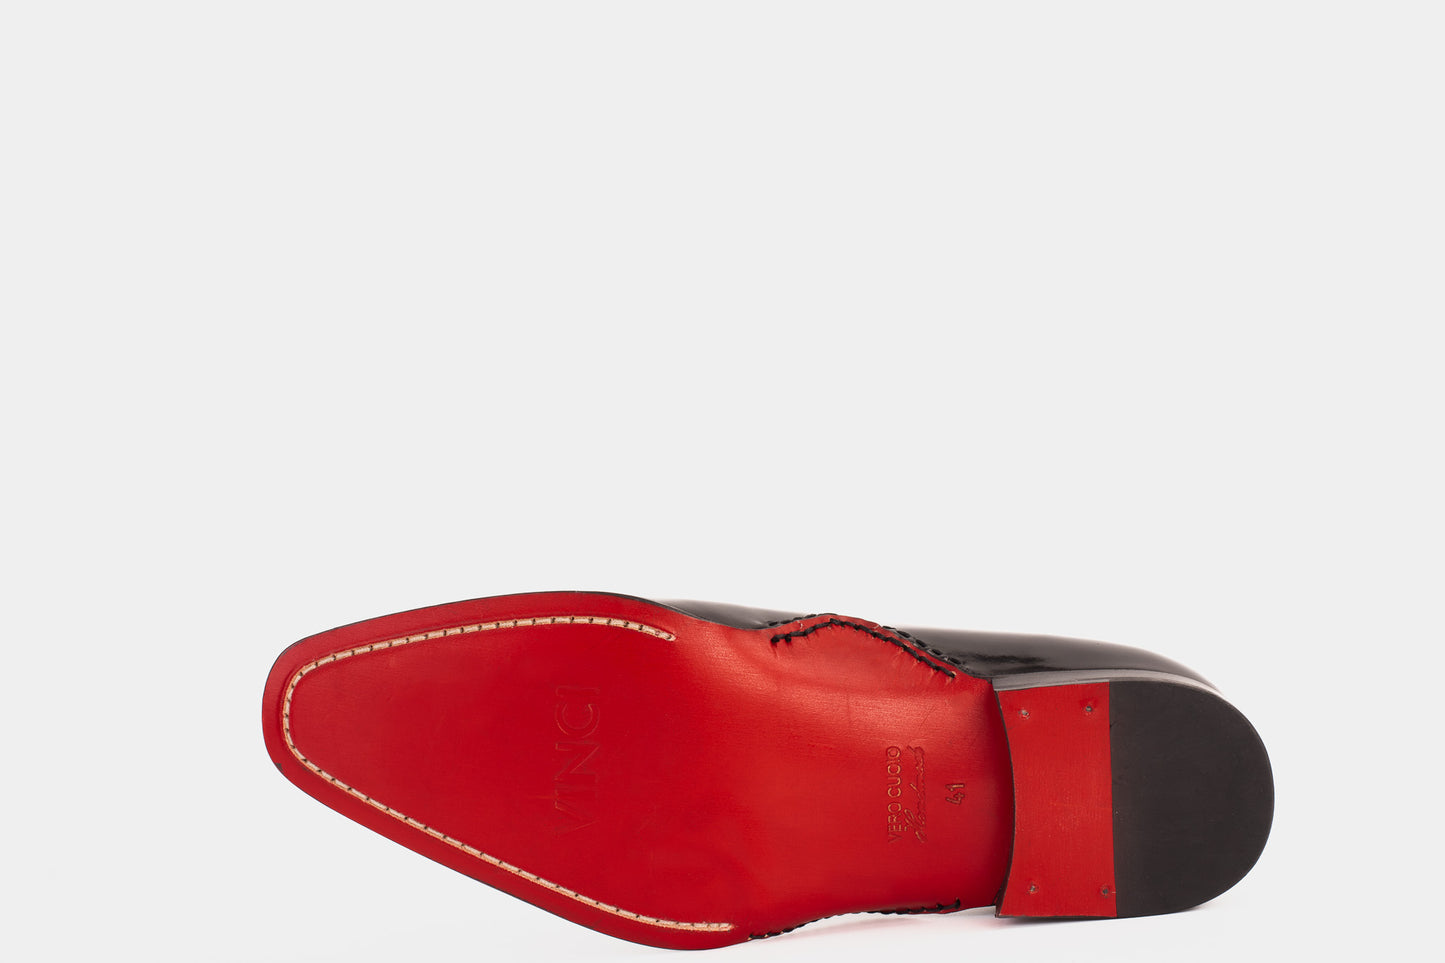 The Royal Hand Craft Black Patent Leather Plain Toe Oxford Men Shoe